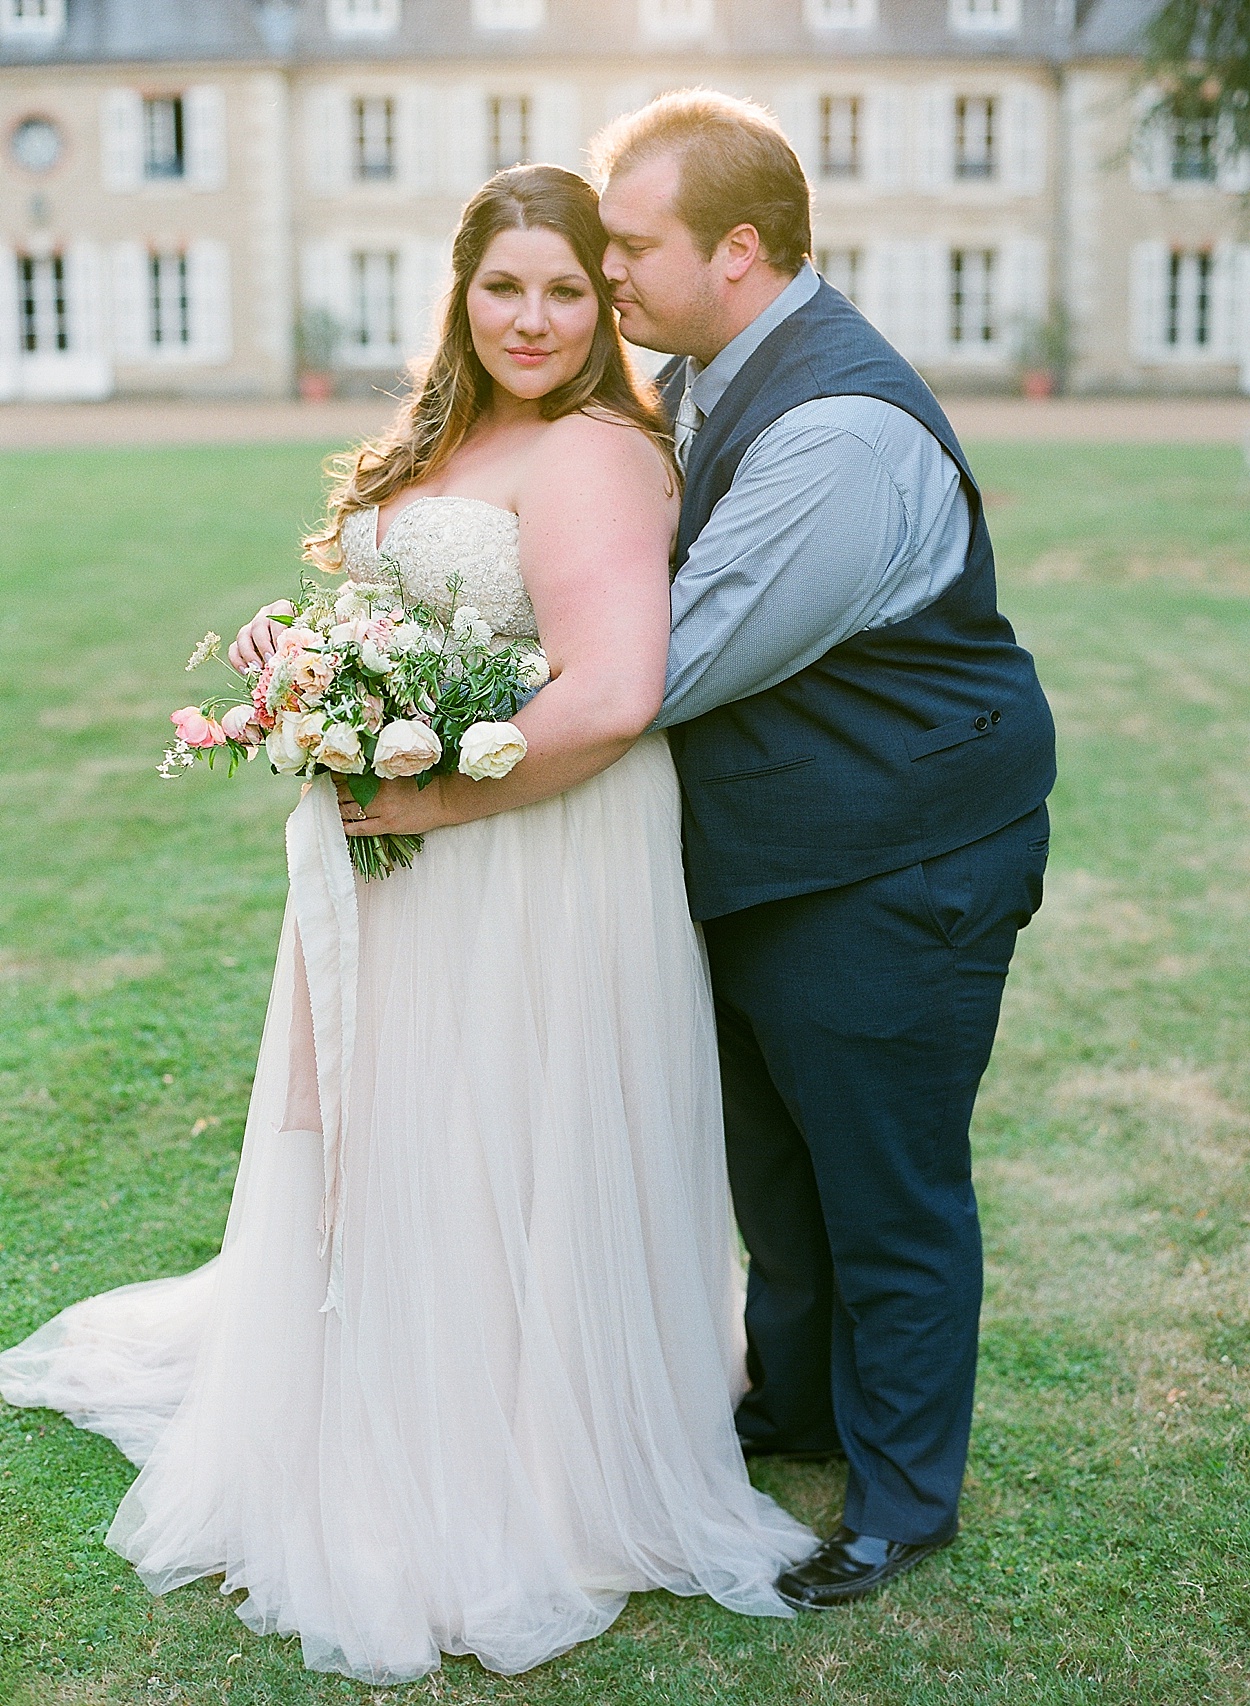 Loire Valley wedding portraits | Abby Grace Photography